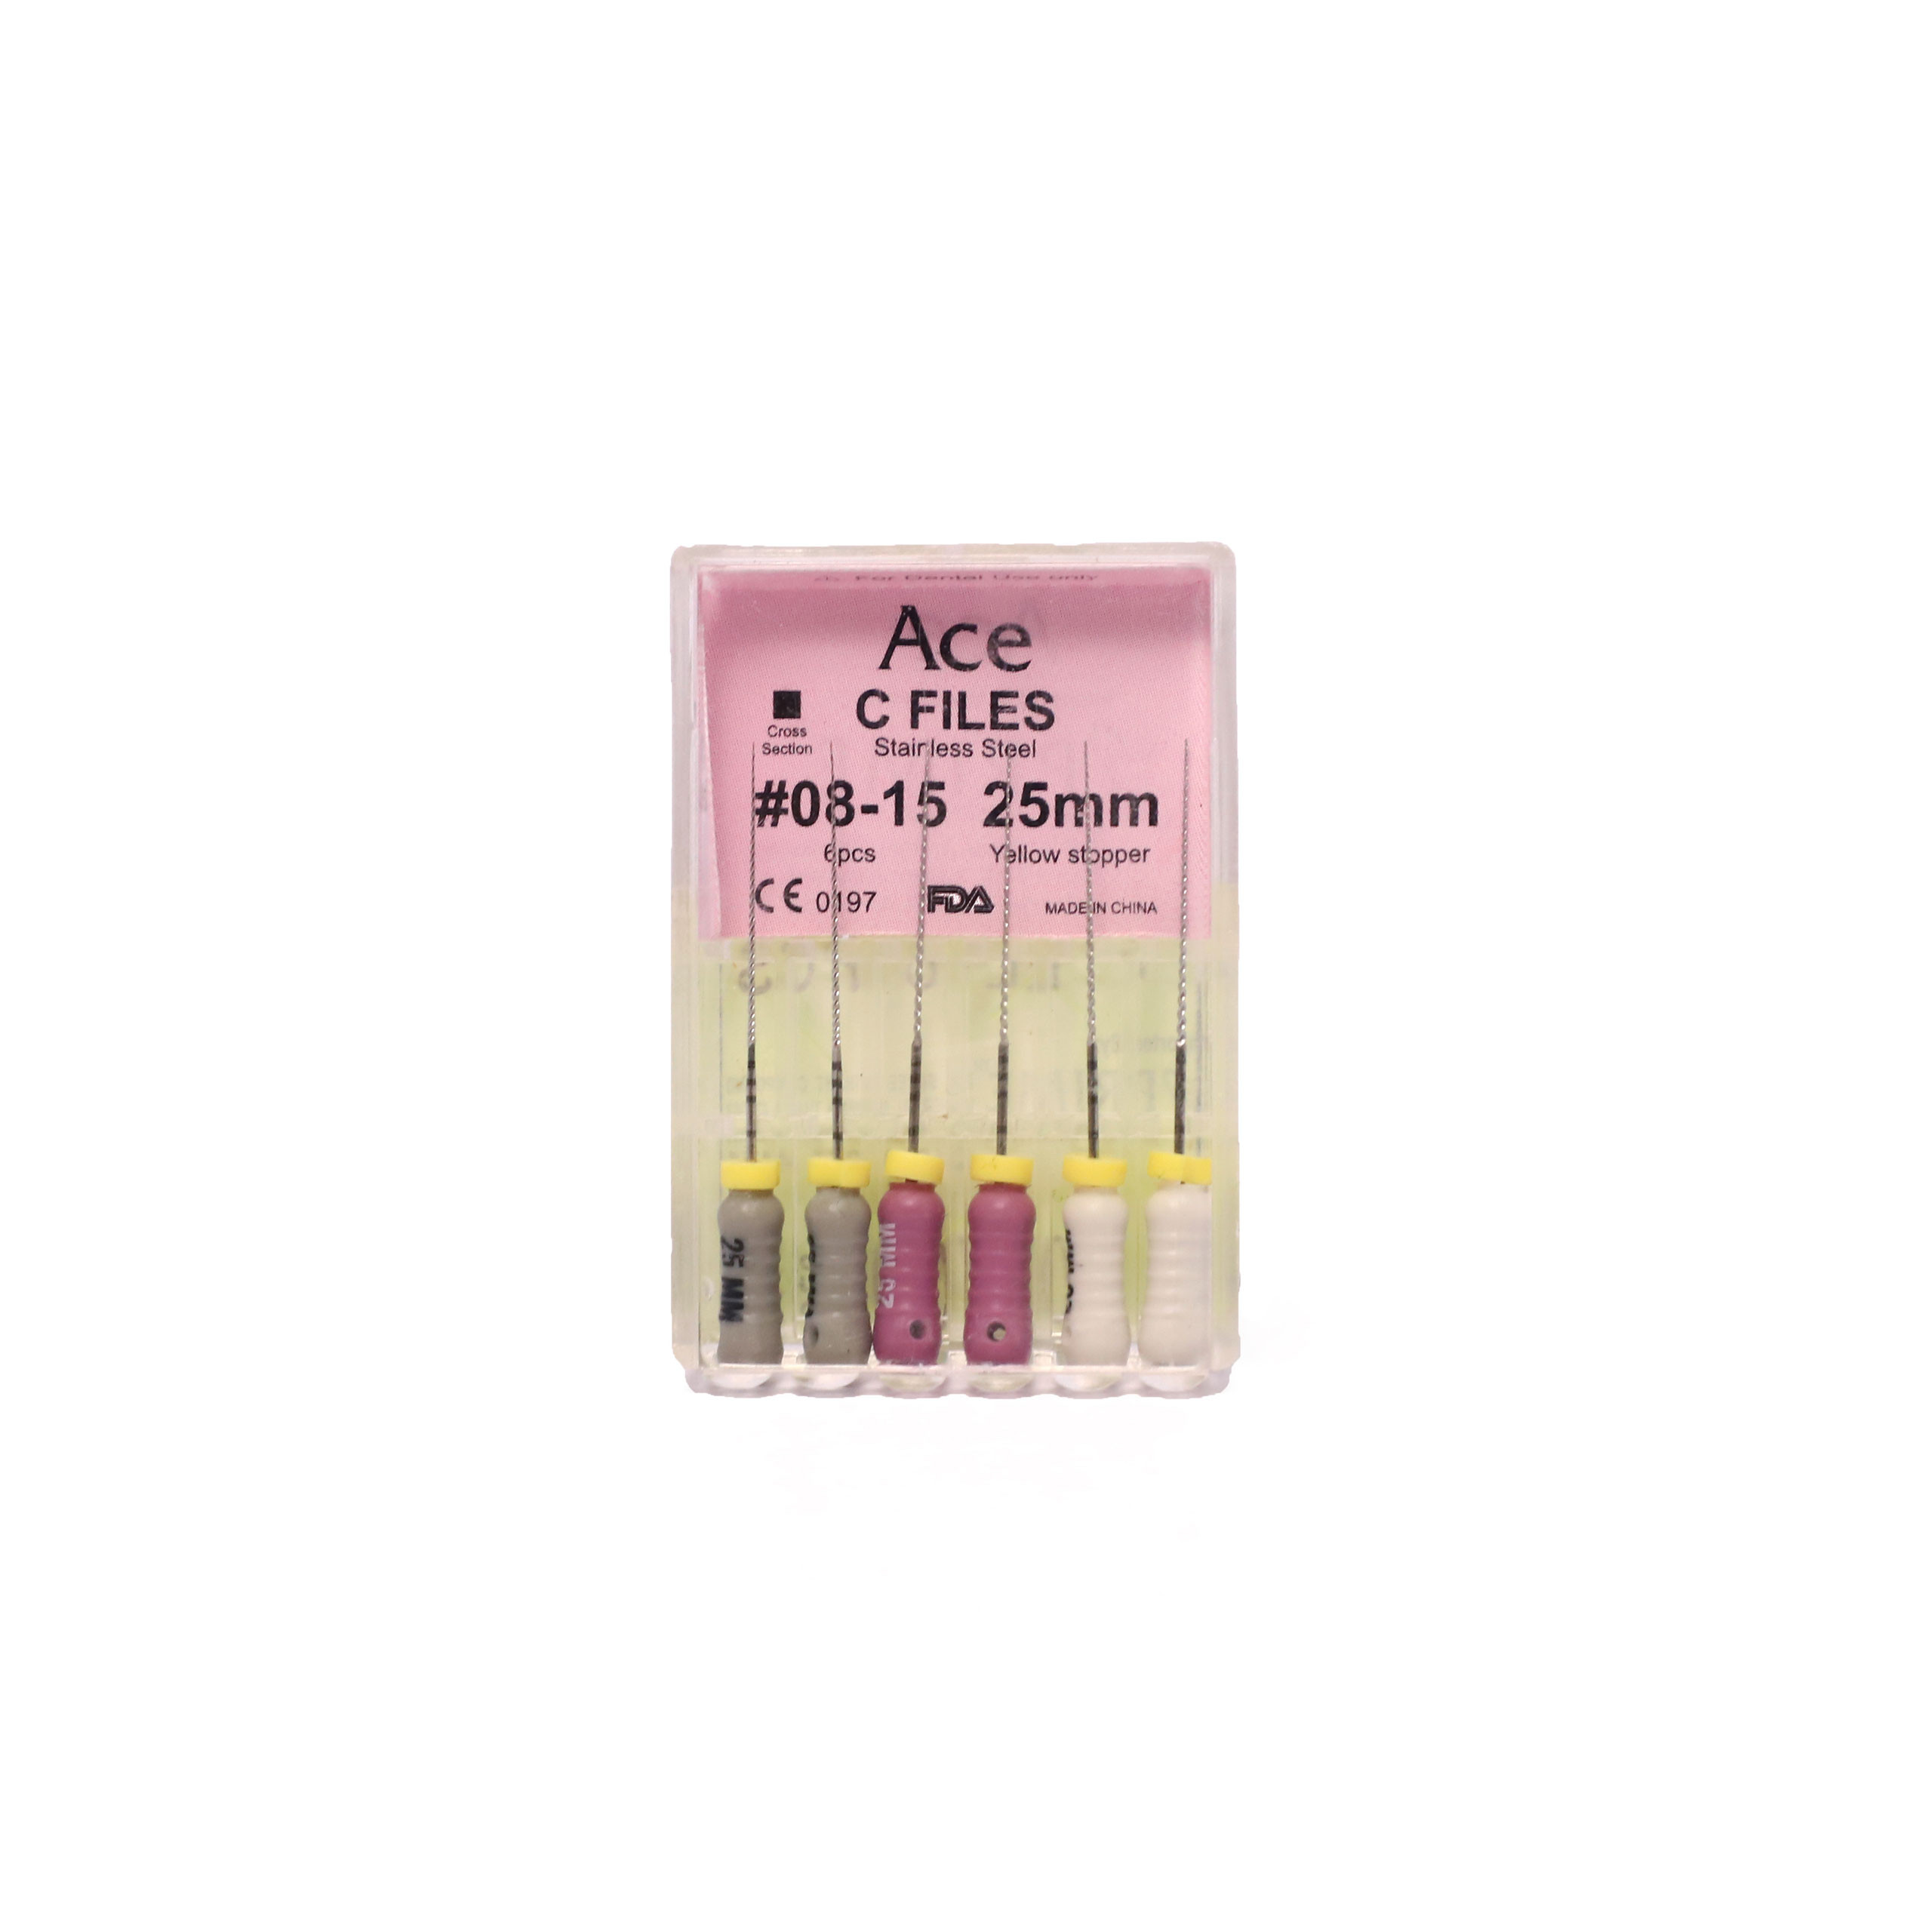 Ace C Files #08-15, 25mm